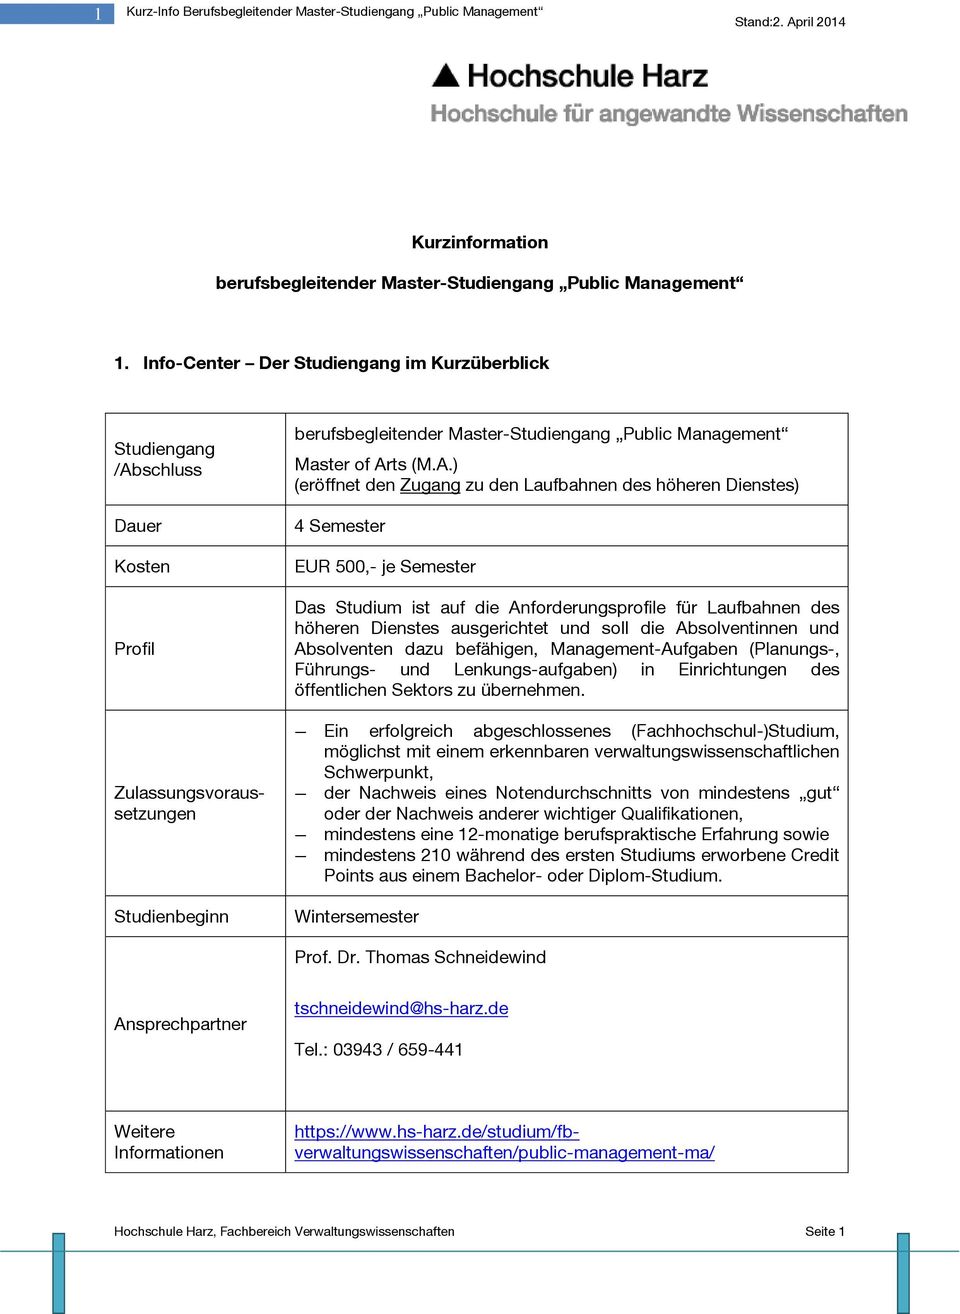 schluss Dauer Kosten Profil tudienbeginn berufsbegleitender Mastertudiengang Public Management Master of Ar